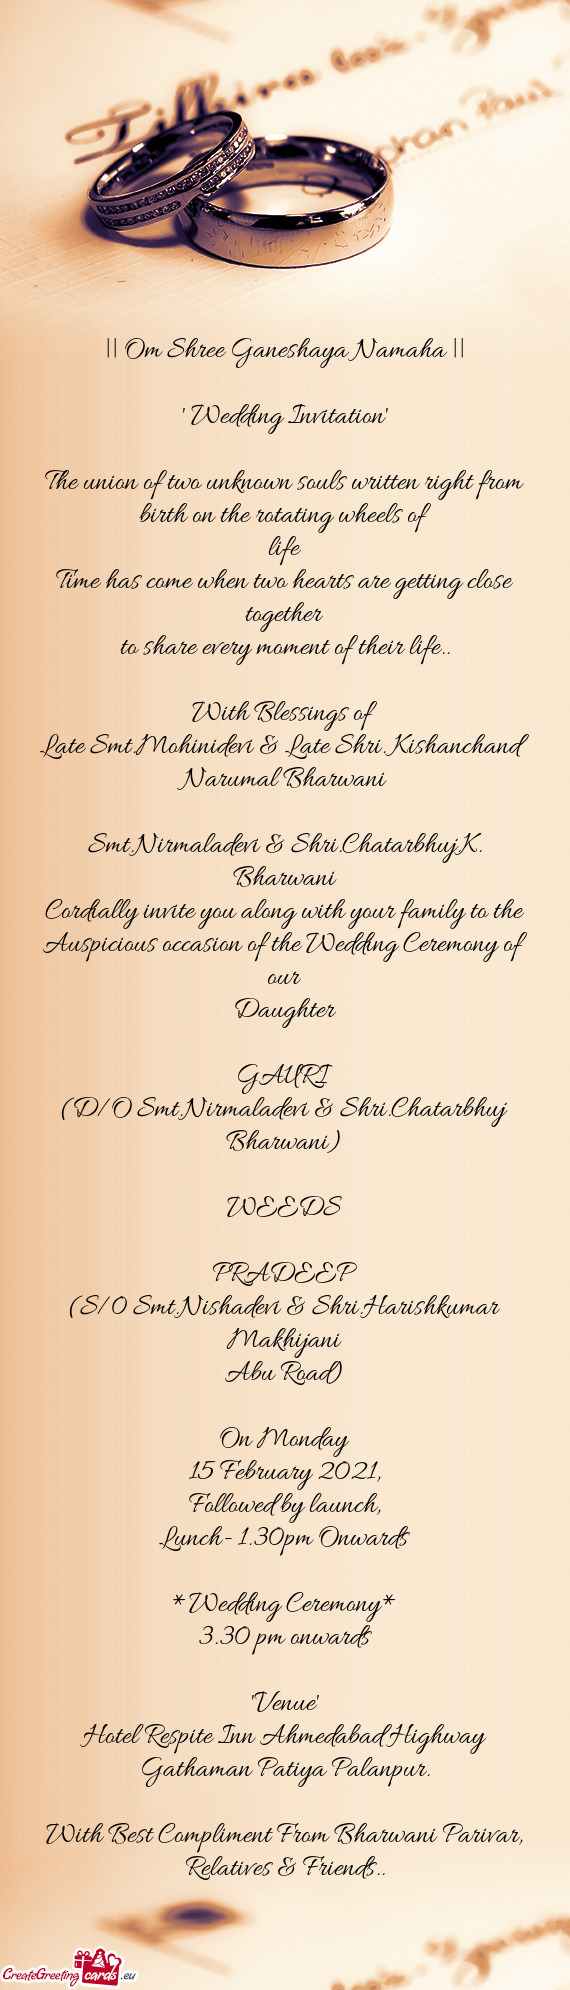 Late Smt.Mohinidevi & Late Shri. Kishanchand